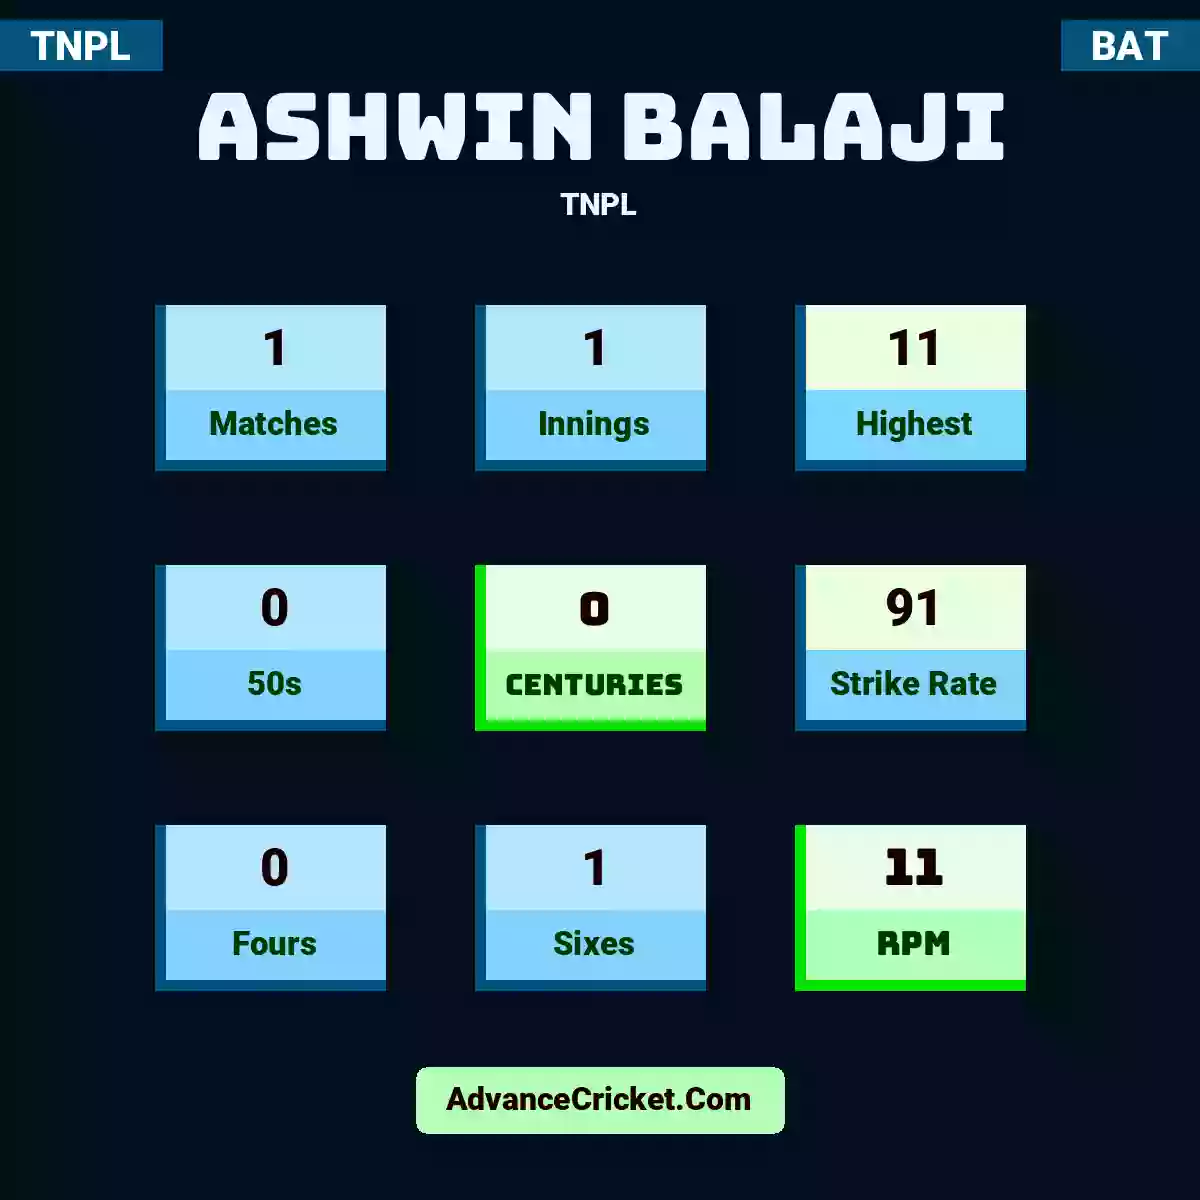 Ashwin Balaji TNPL , Ashwin Balaji played 1 matches, scored 11 runs as highest, 0 half-centuries, and 0 centuries, with a strike rate of 91. A.Balaji hit 0 fours and 1 sixes, with an RPM of 11.